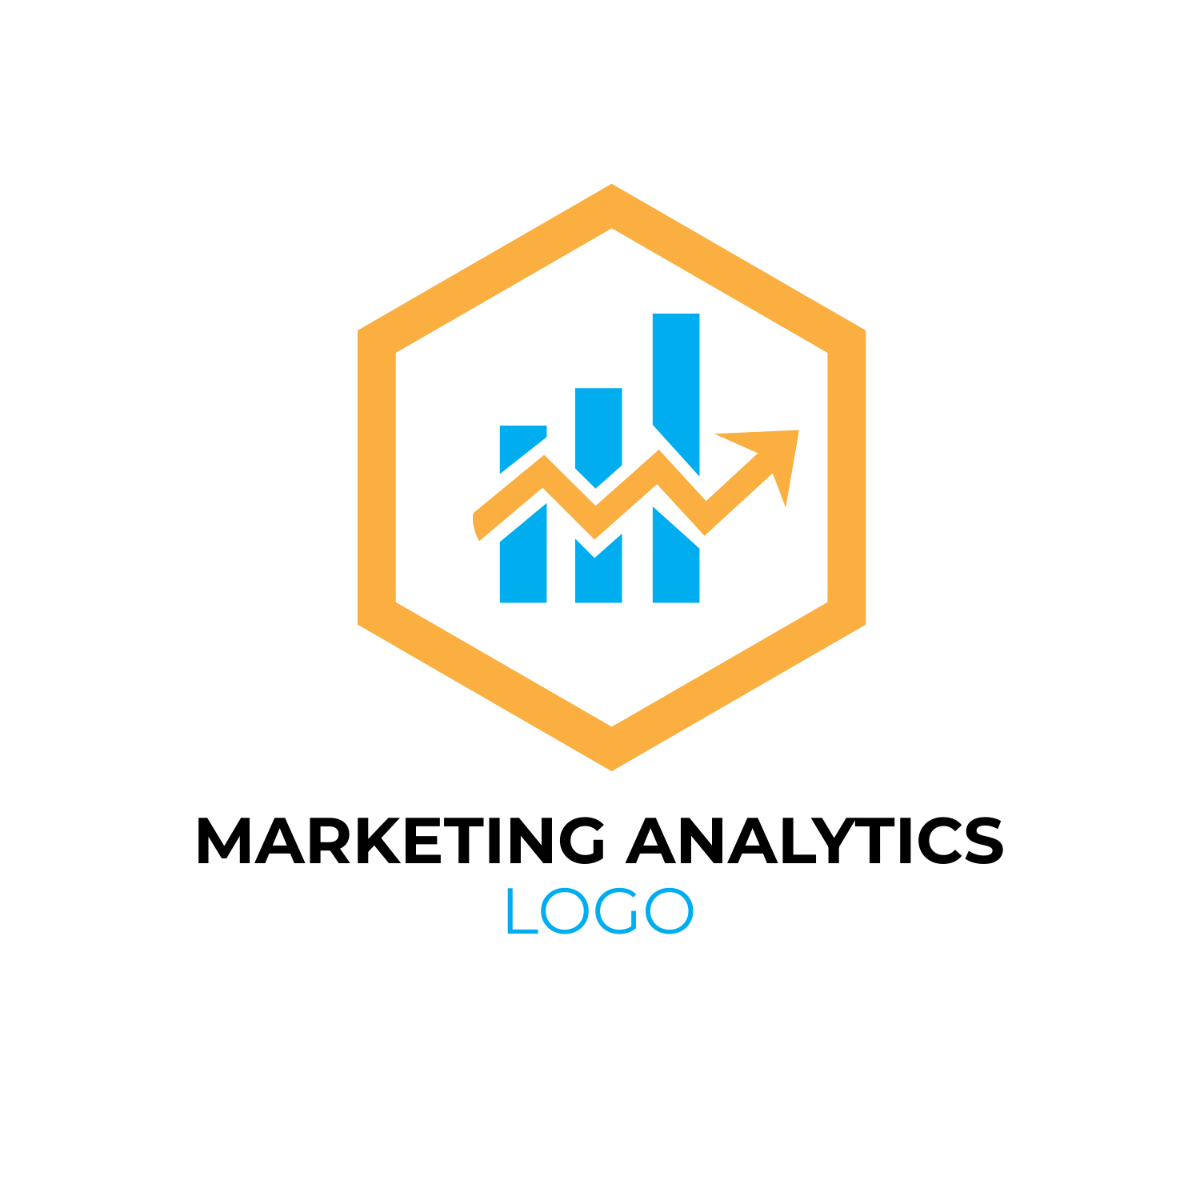 Marketing Analytics Logo Template